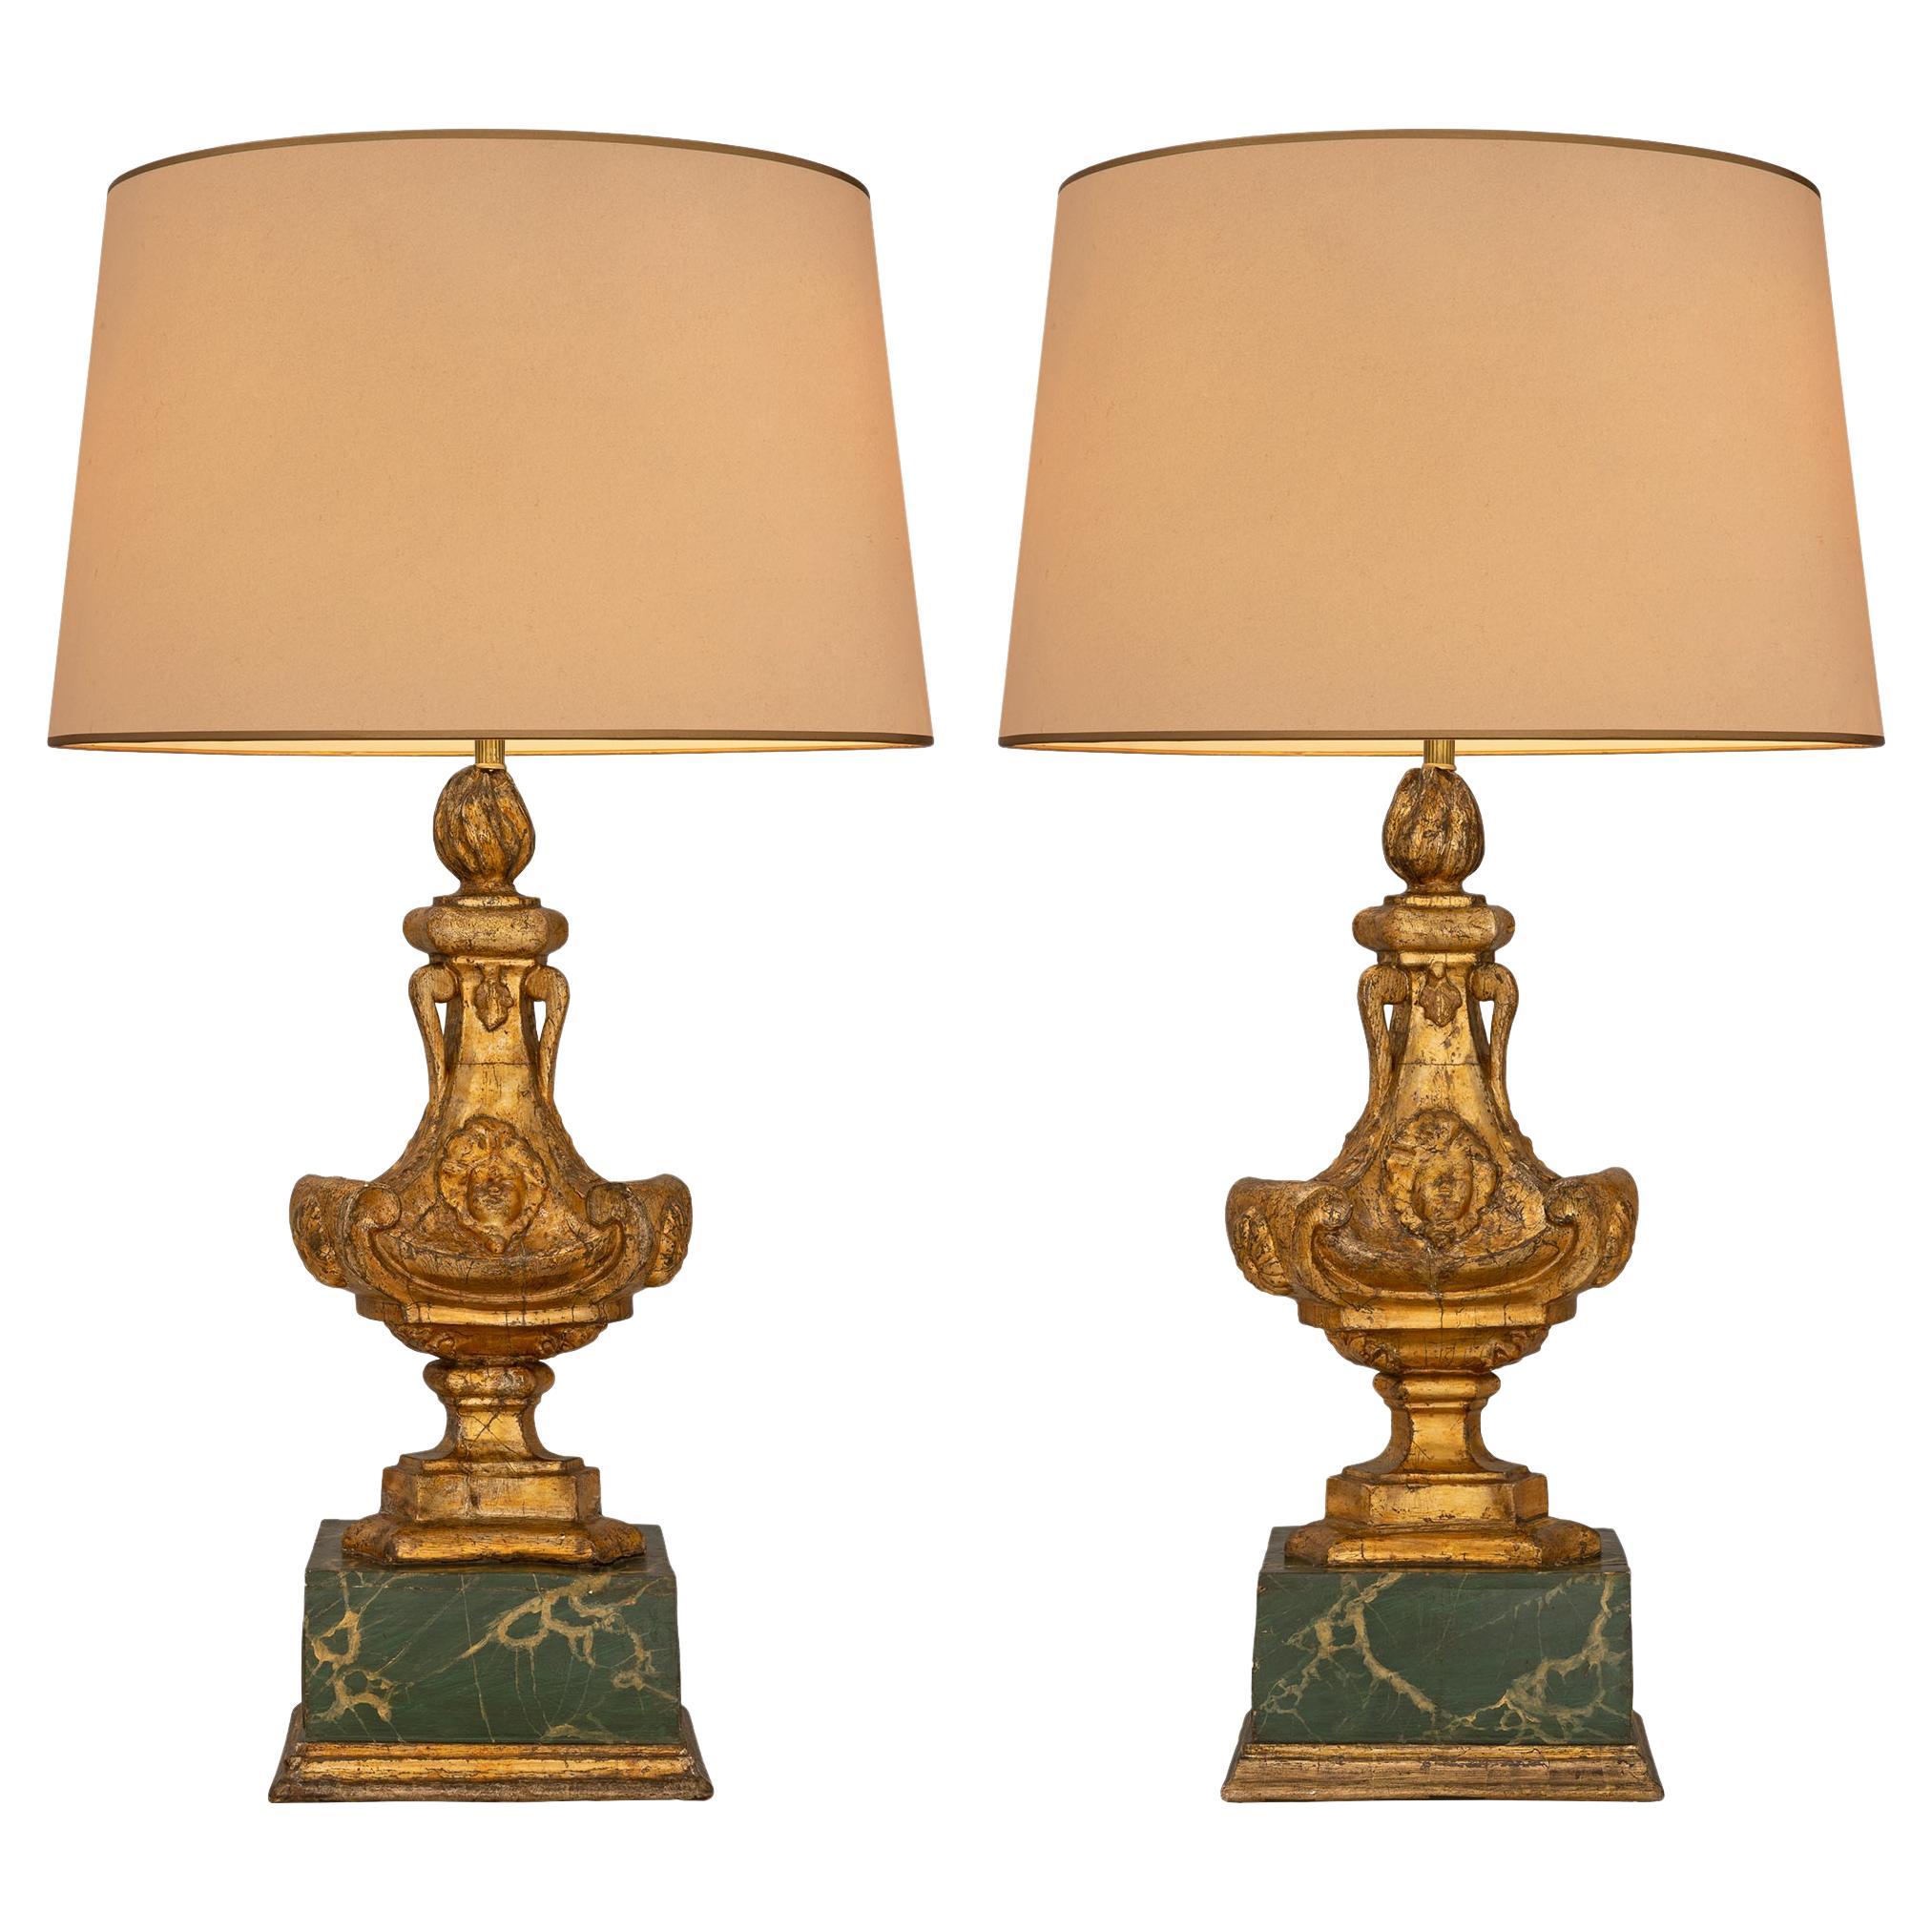 Paar italienische geschnitzte Mekka-Lampen aus dem 18. Jahrhundert aus der Louis-XVI.-Periode